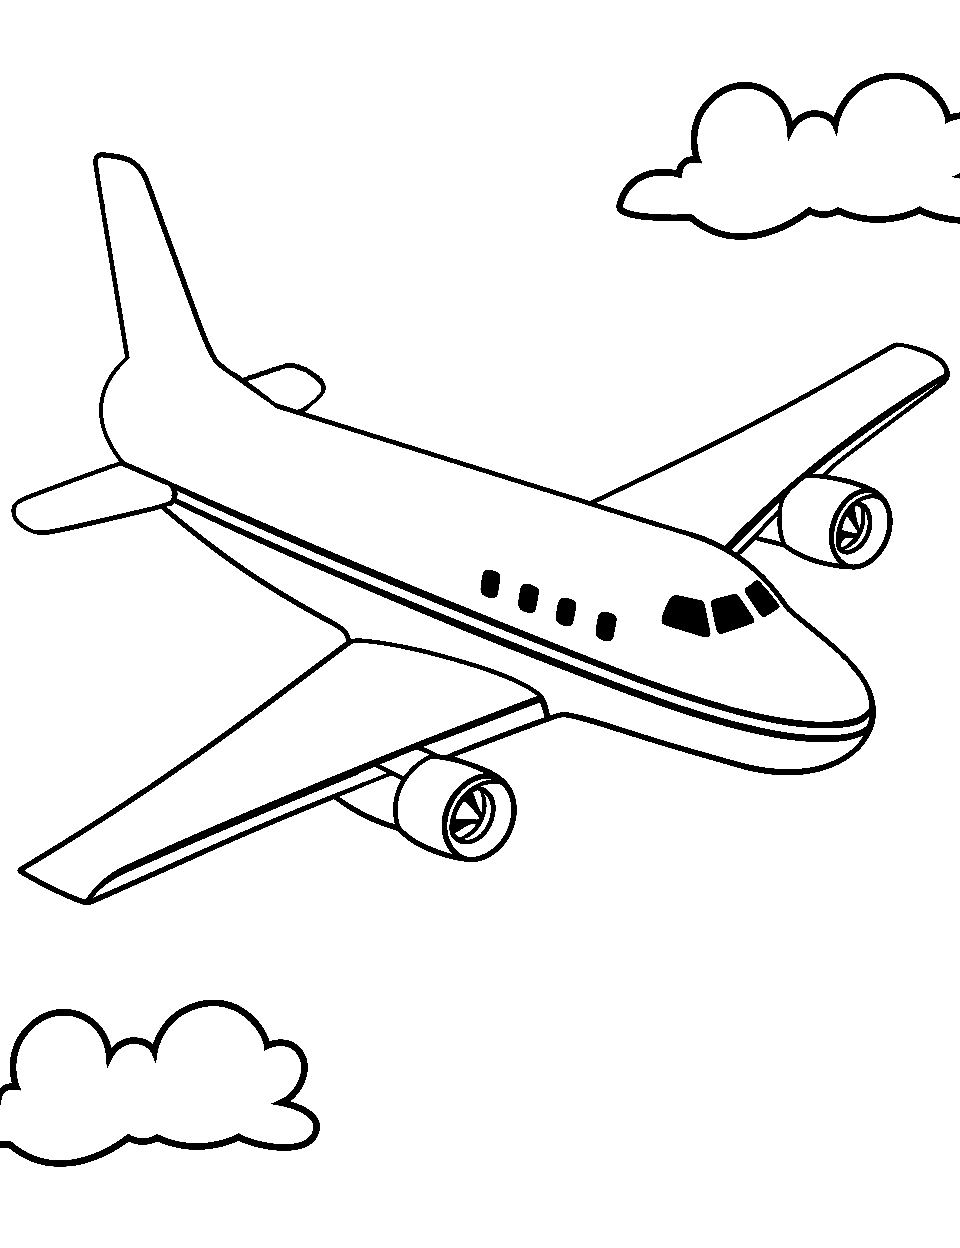 Retro Passenger Plane Airplane Coloring Page - A retro-styled passenger plane.